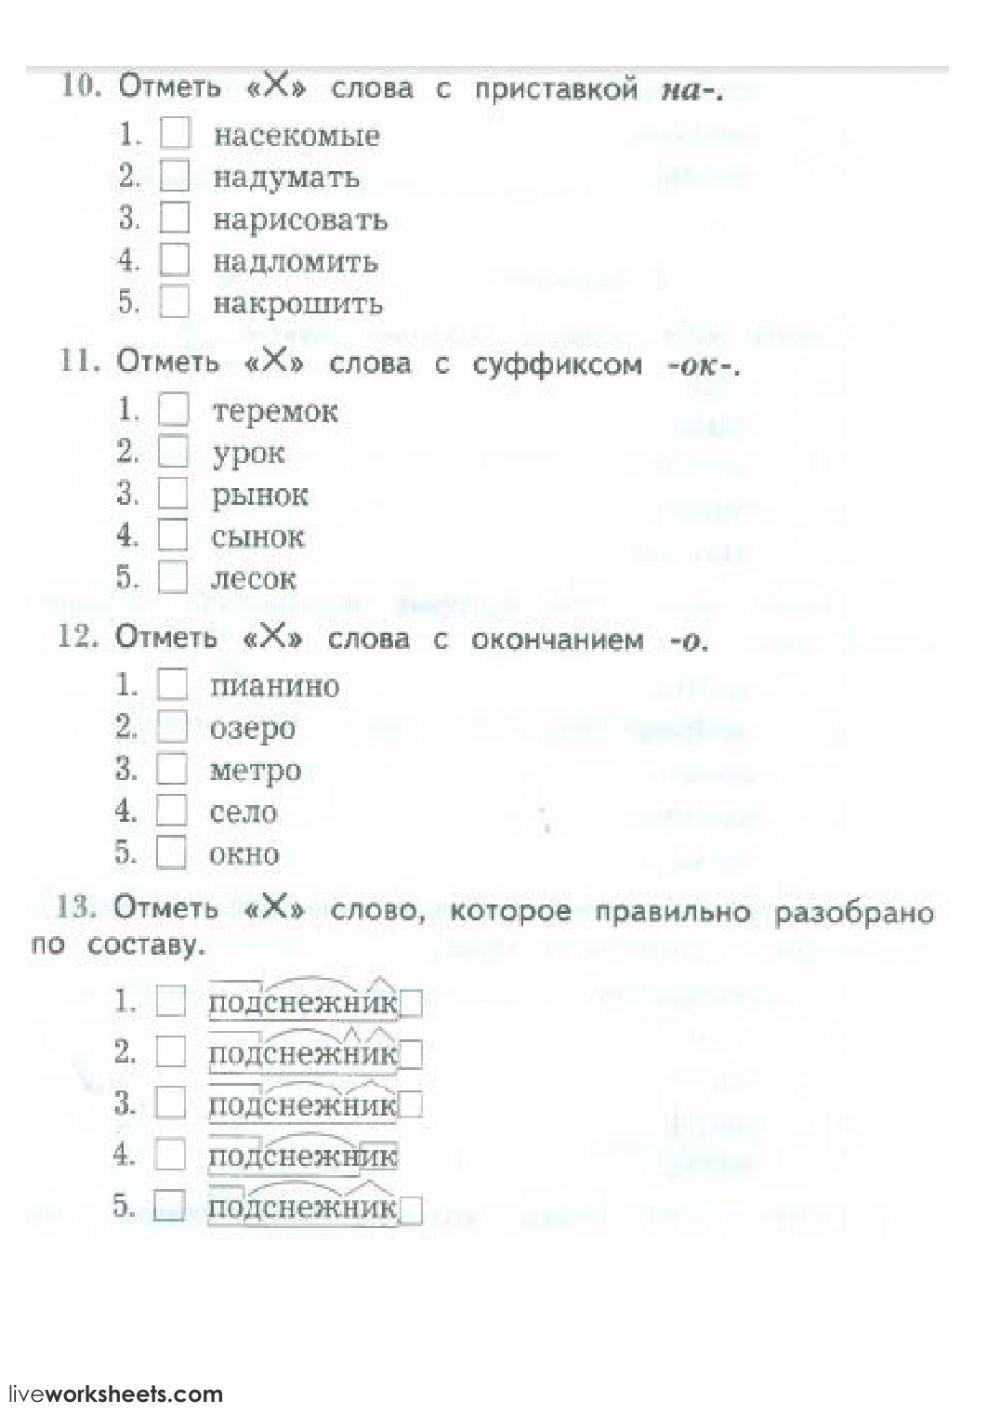 тест по русскому языку